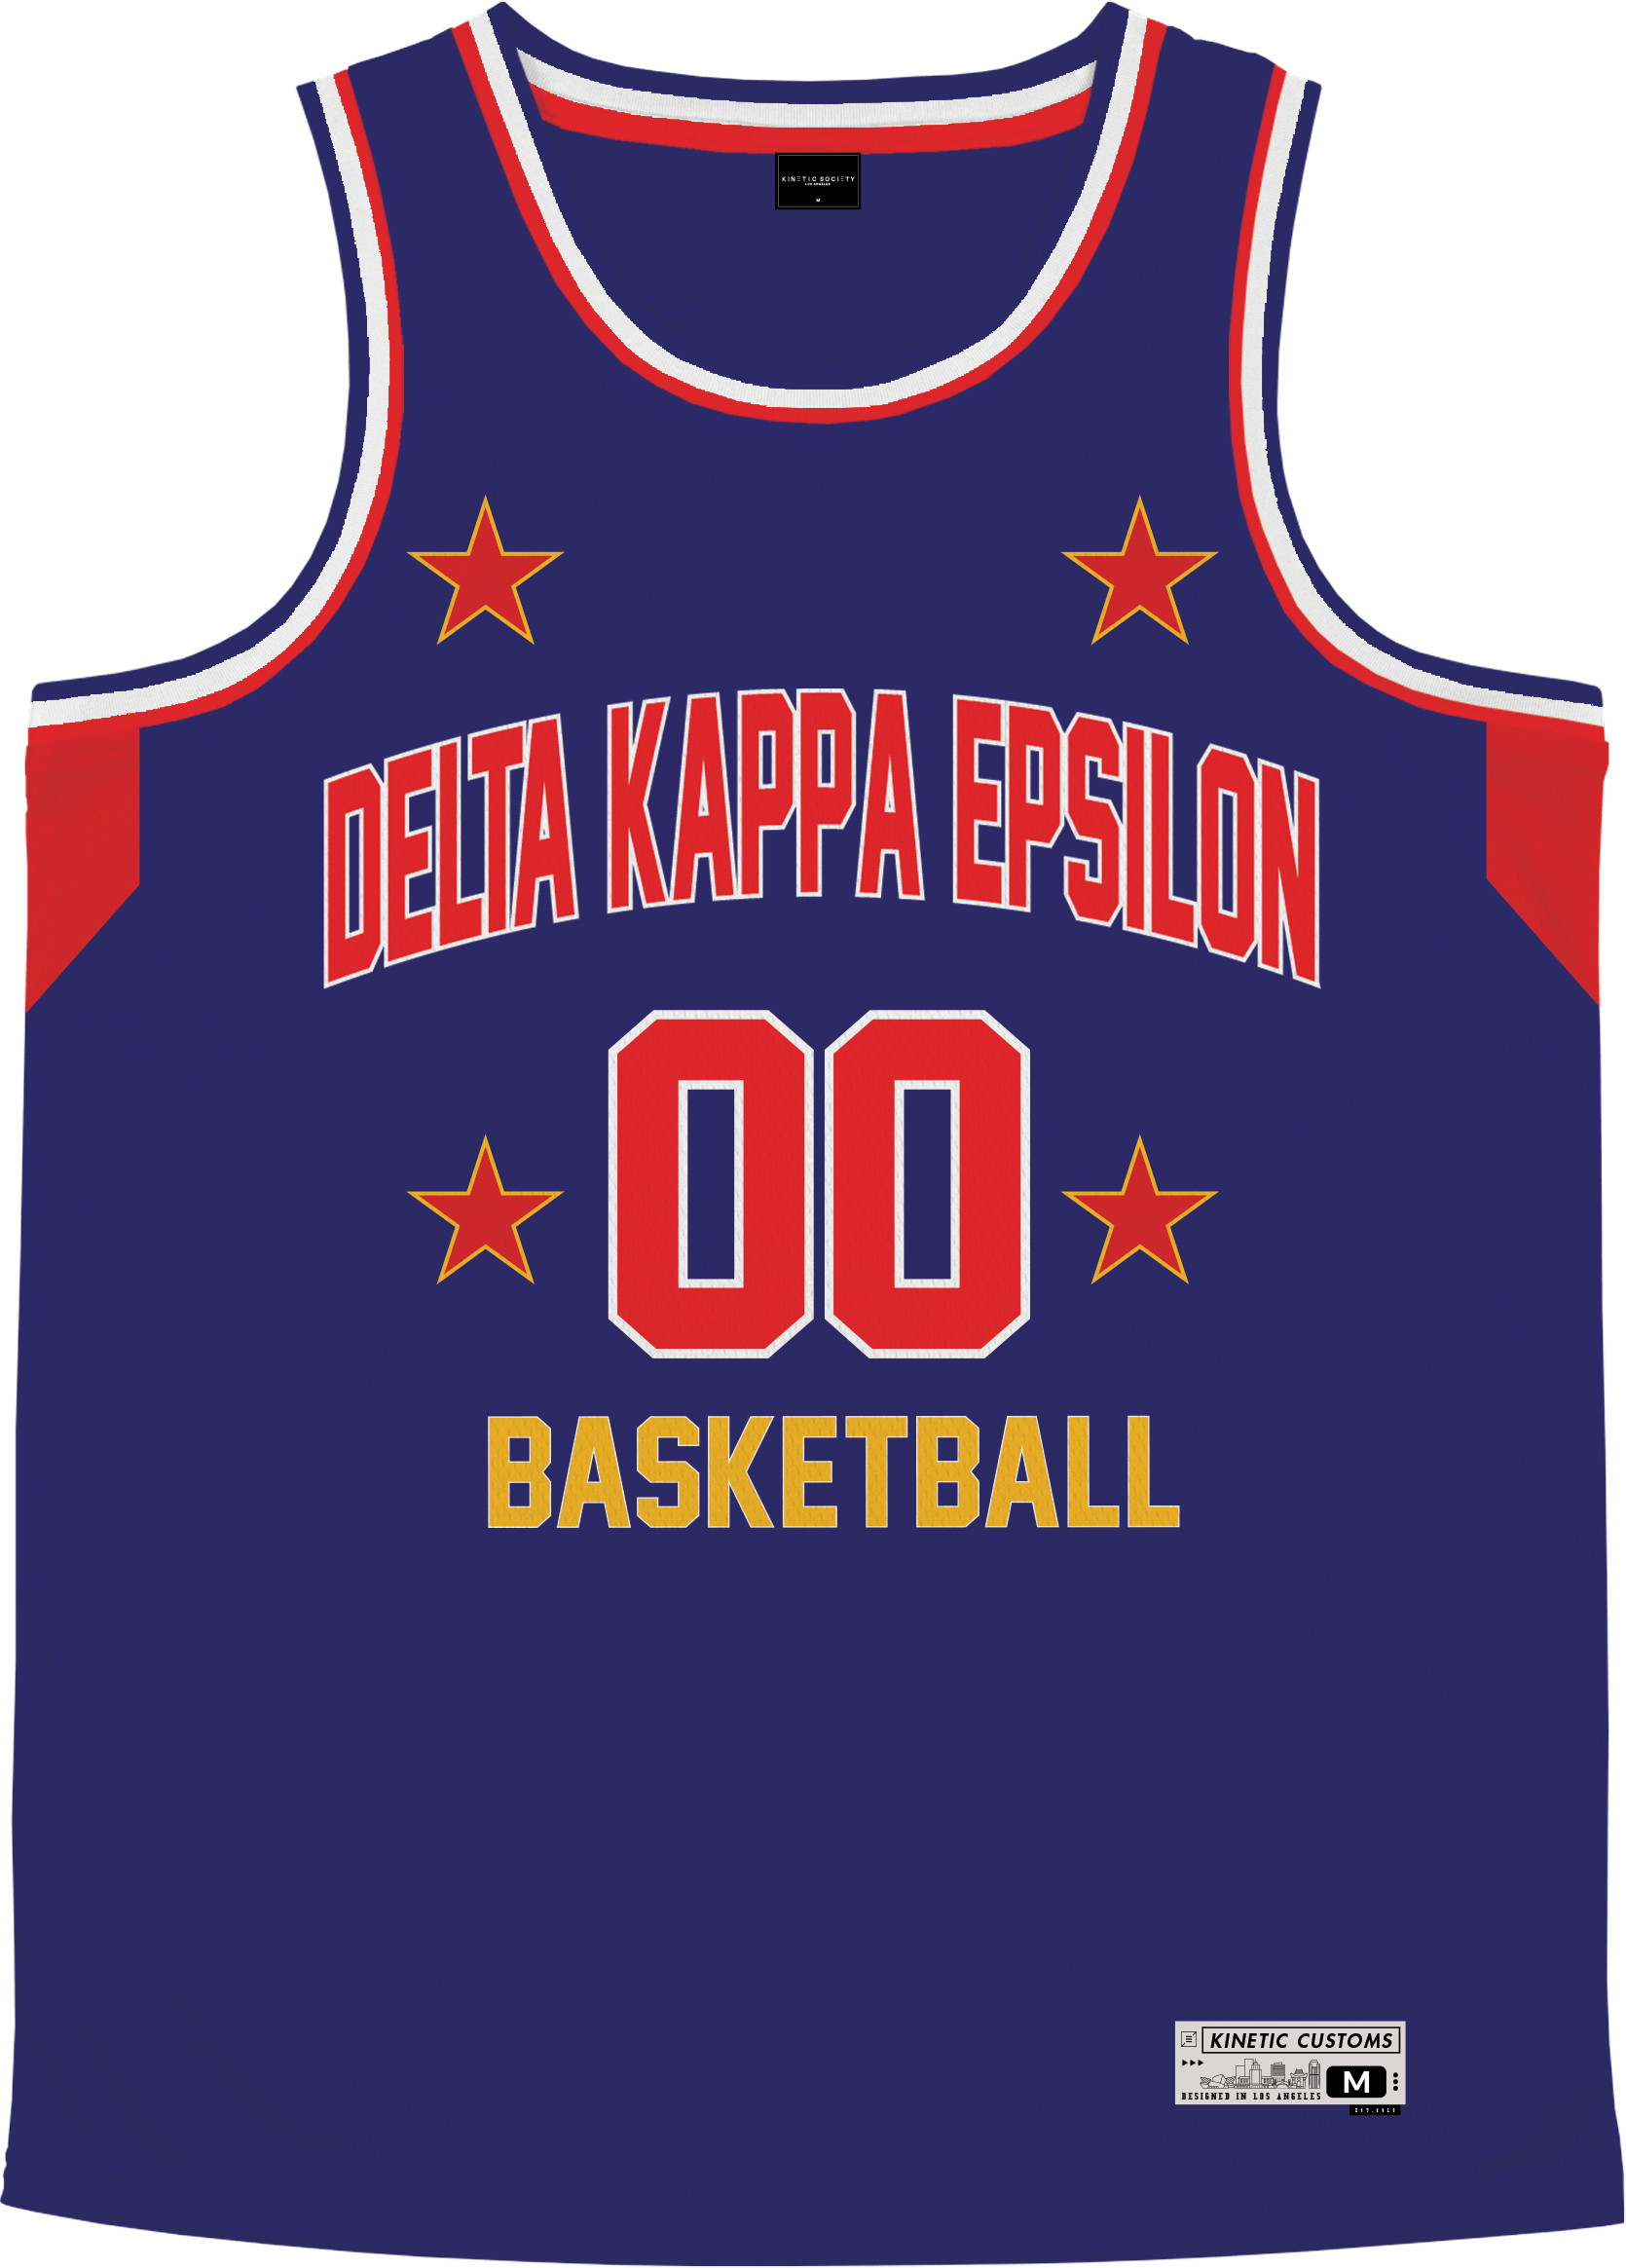 Delta Kappa Epsilon - Retro Ballers Basketball Jersey - Kinetic Society